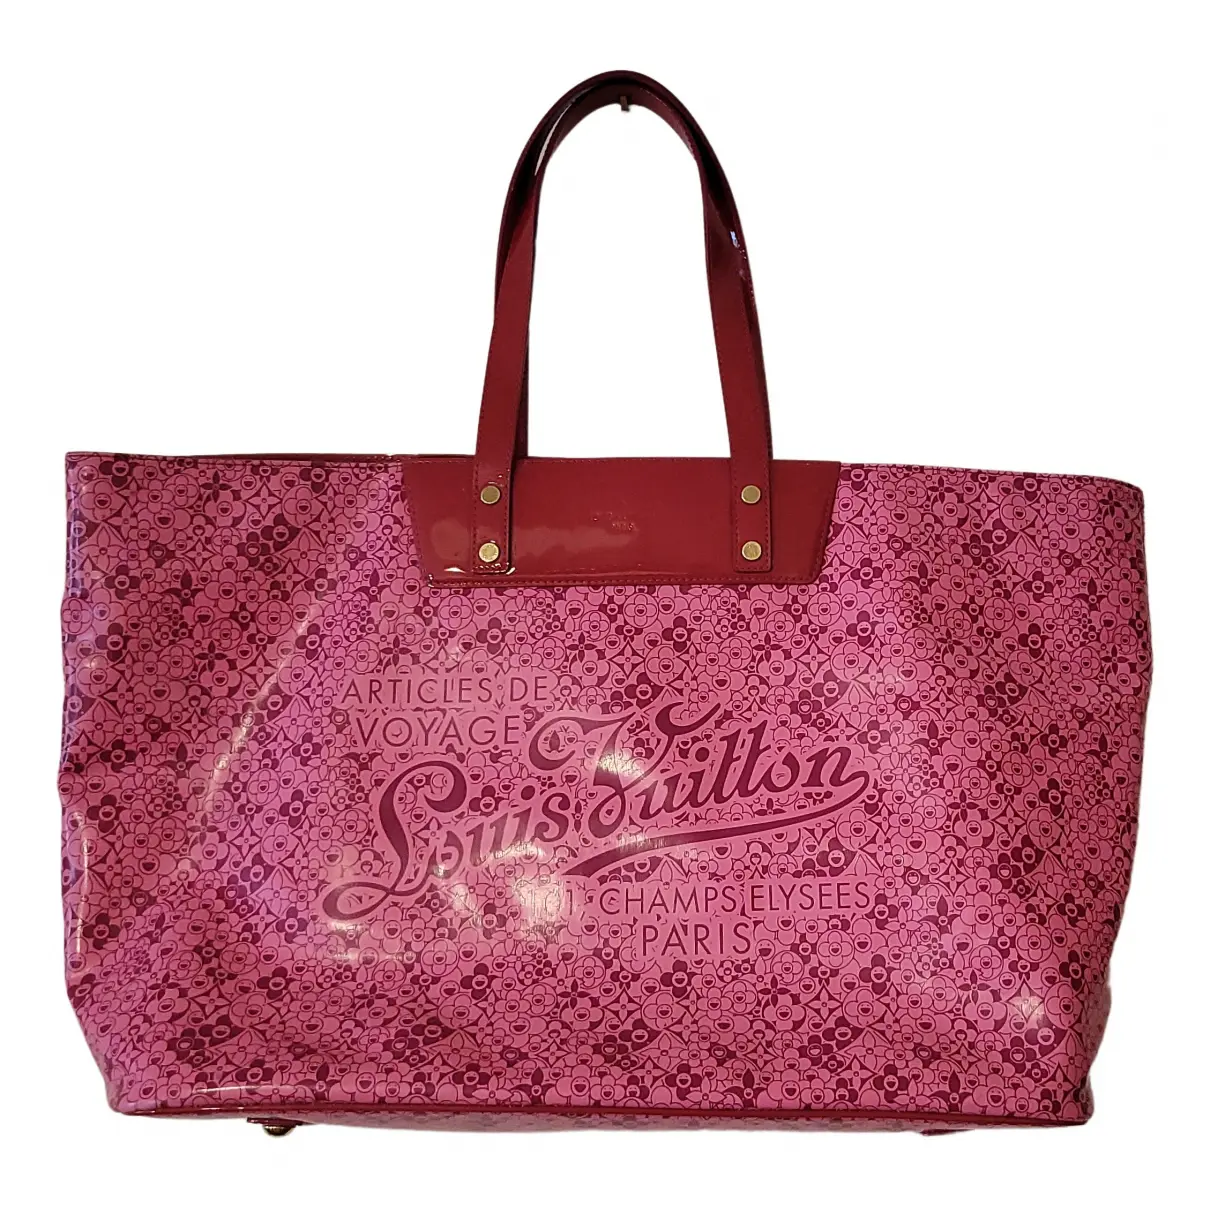 Patent leather travel bag Louis Vuitton